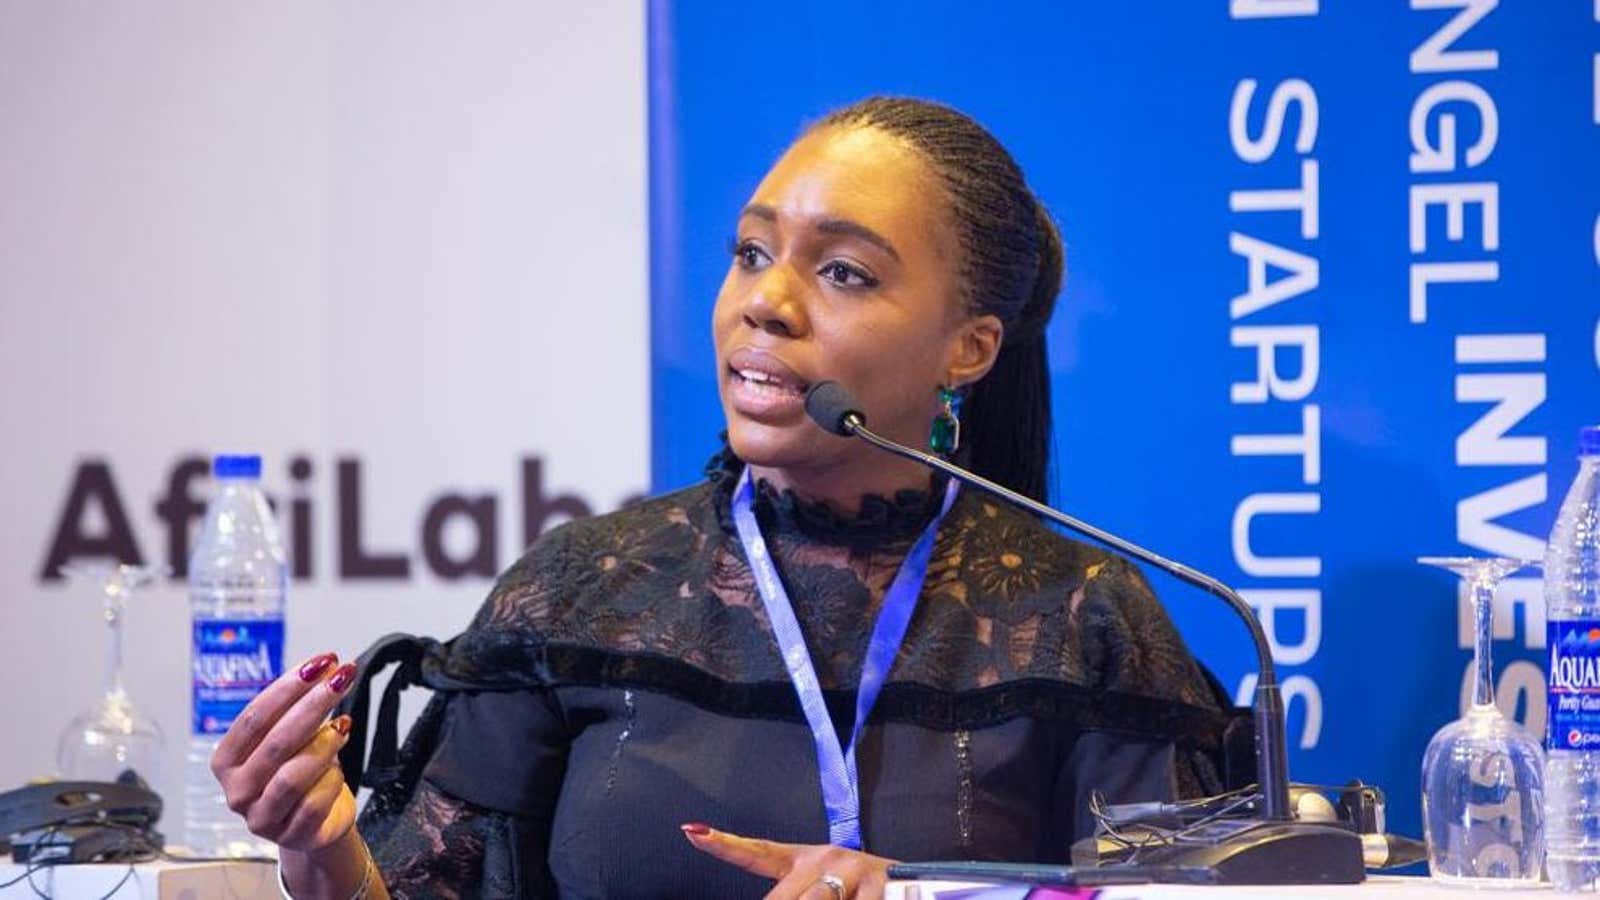 Anna Ekeledo, executive director of AfriLabs